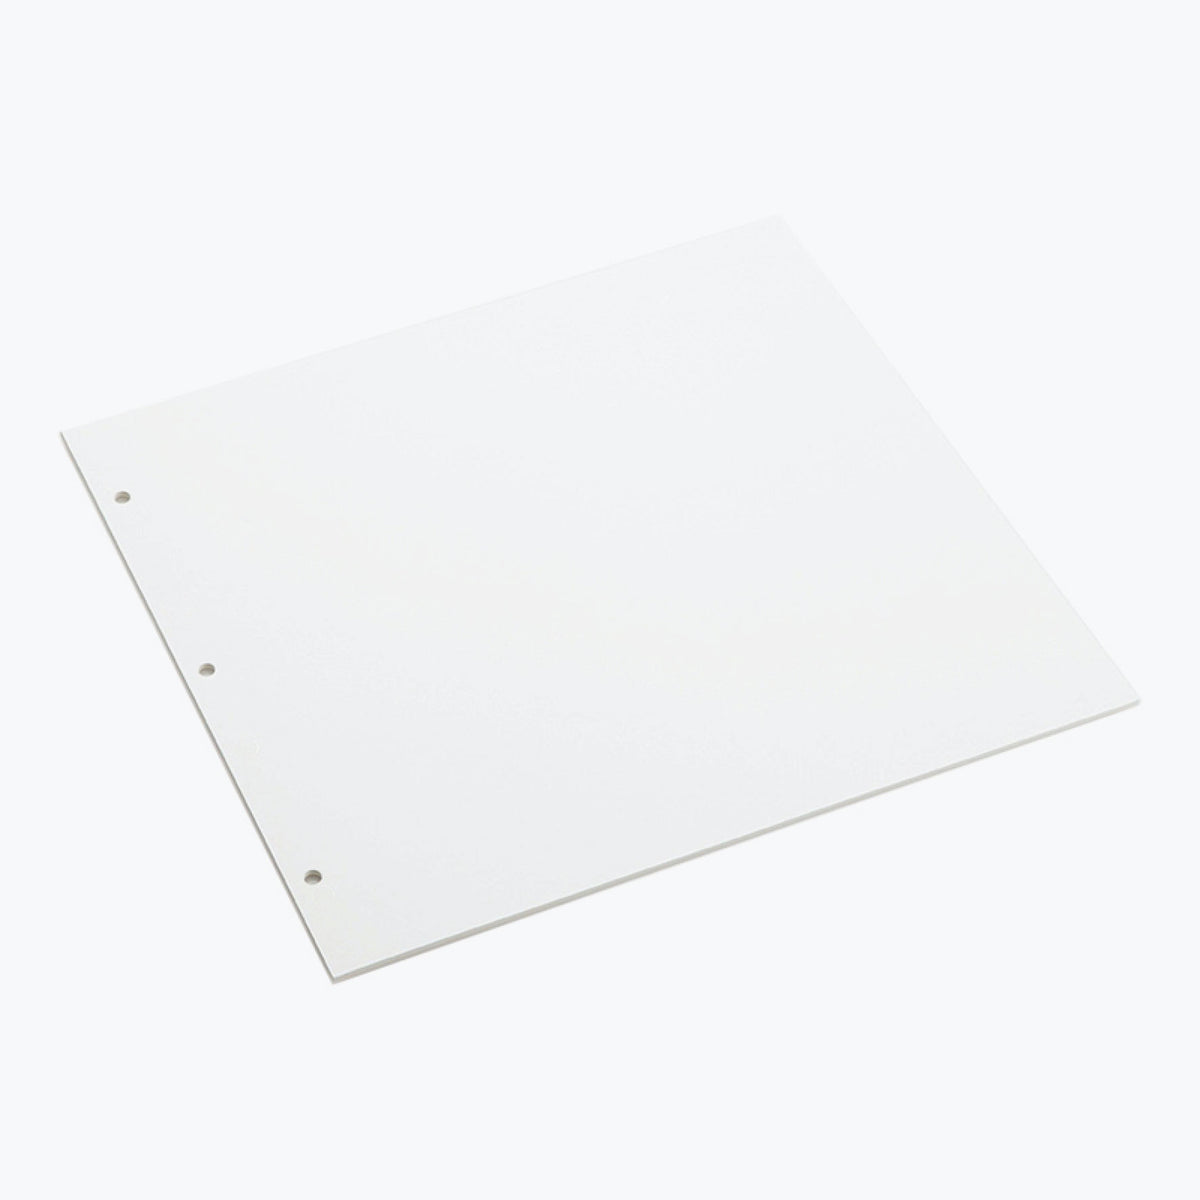 Bookbinders Design - Insert - Photo Mounting Paper - Columbus - Large - White